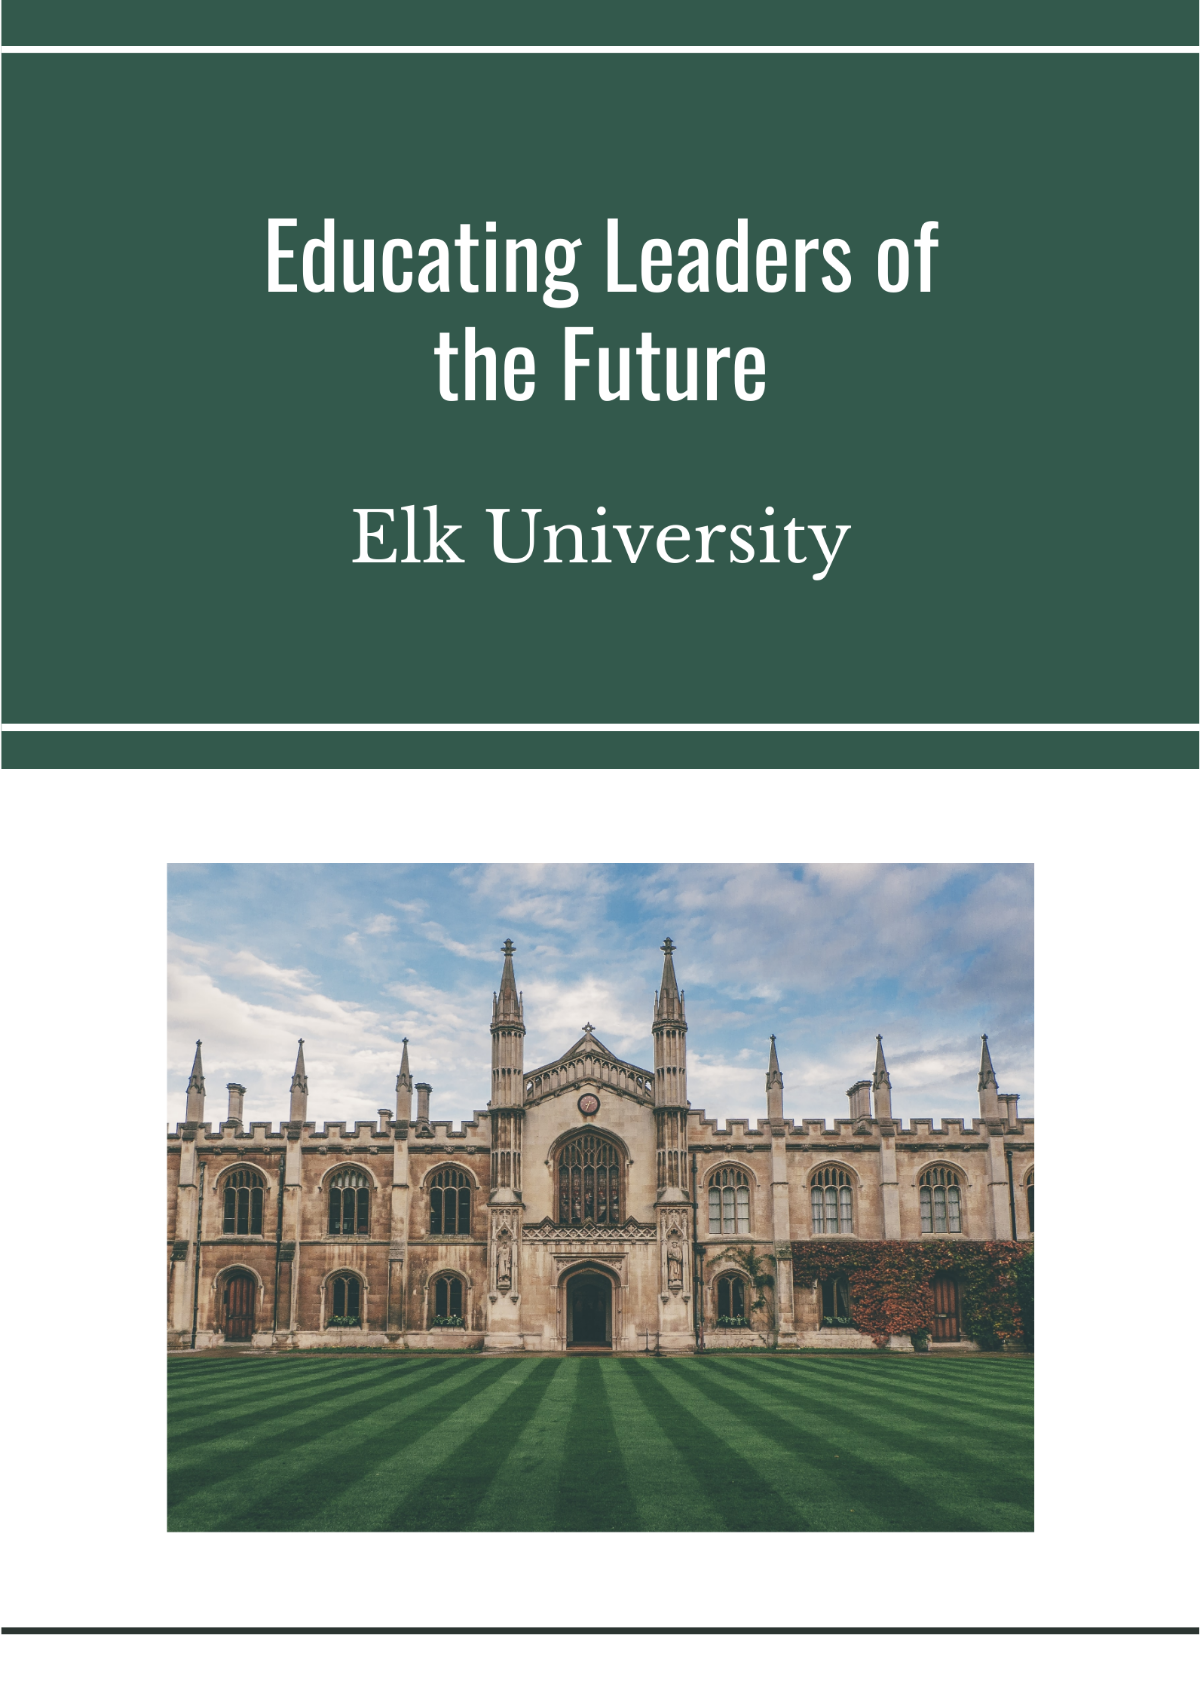 Free University Flip Book Template